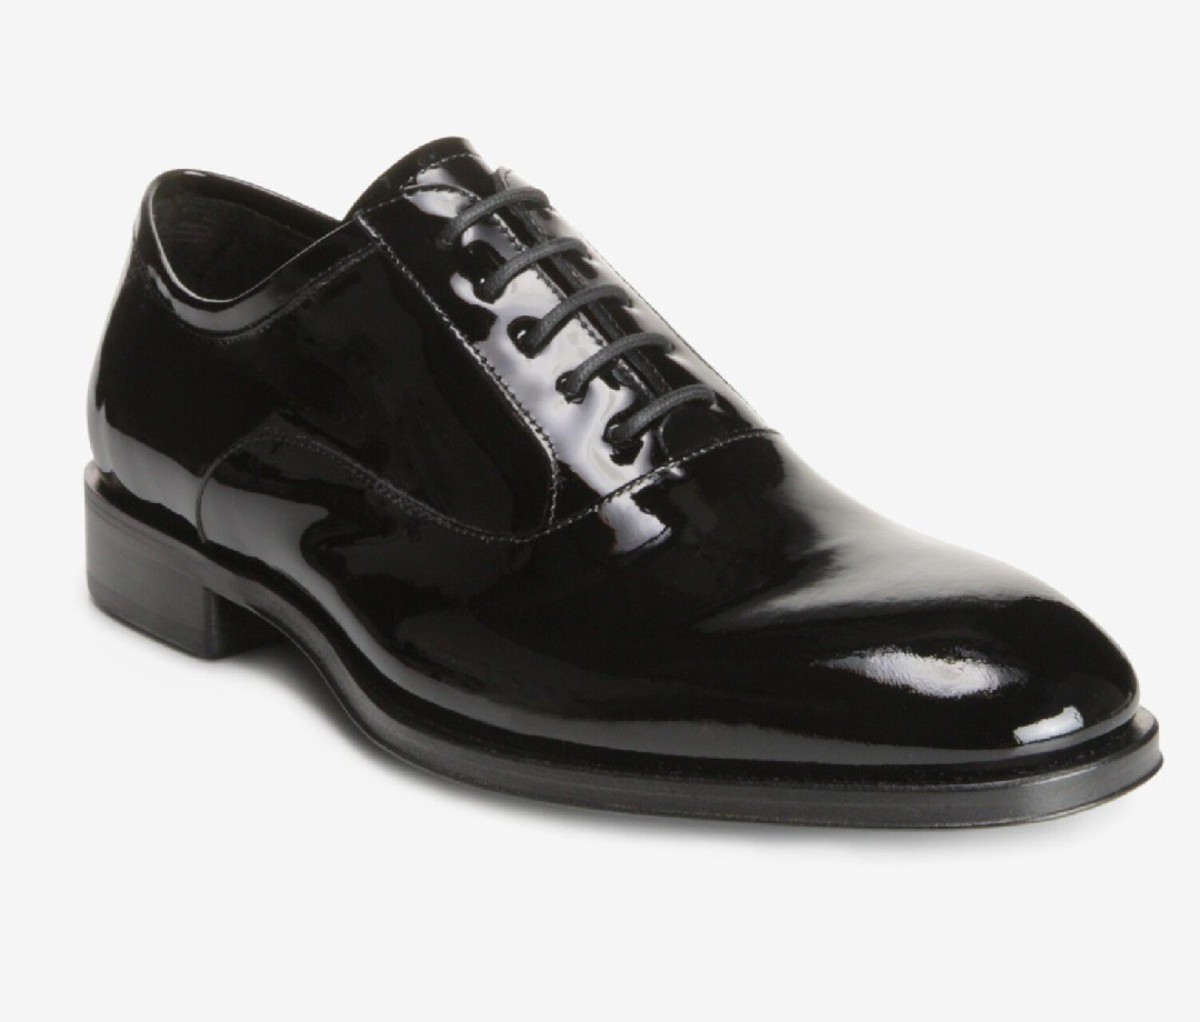 Top 6 Best Leather Shoes For Men (2022) Allen Edmonds La Scala Italian Oxford